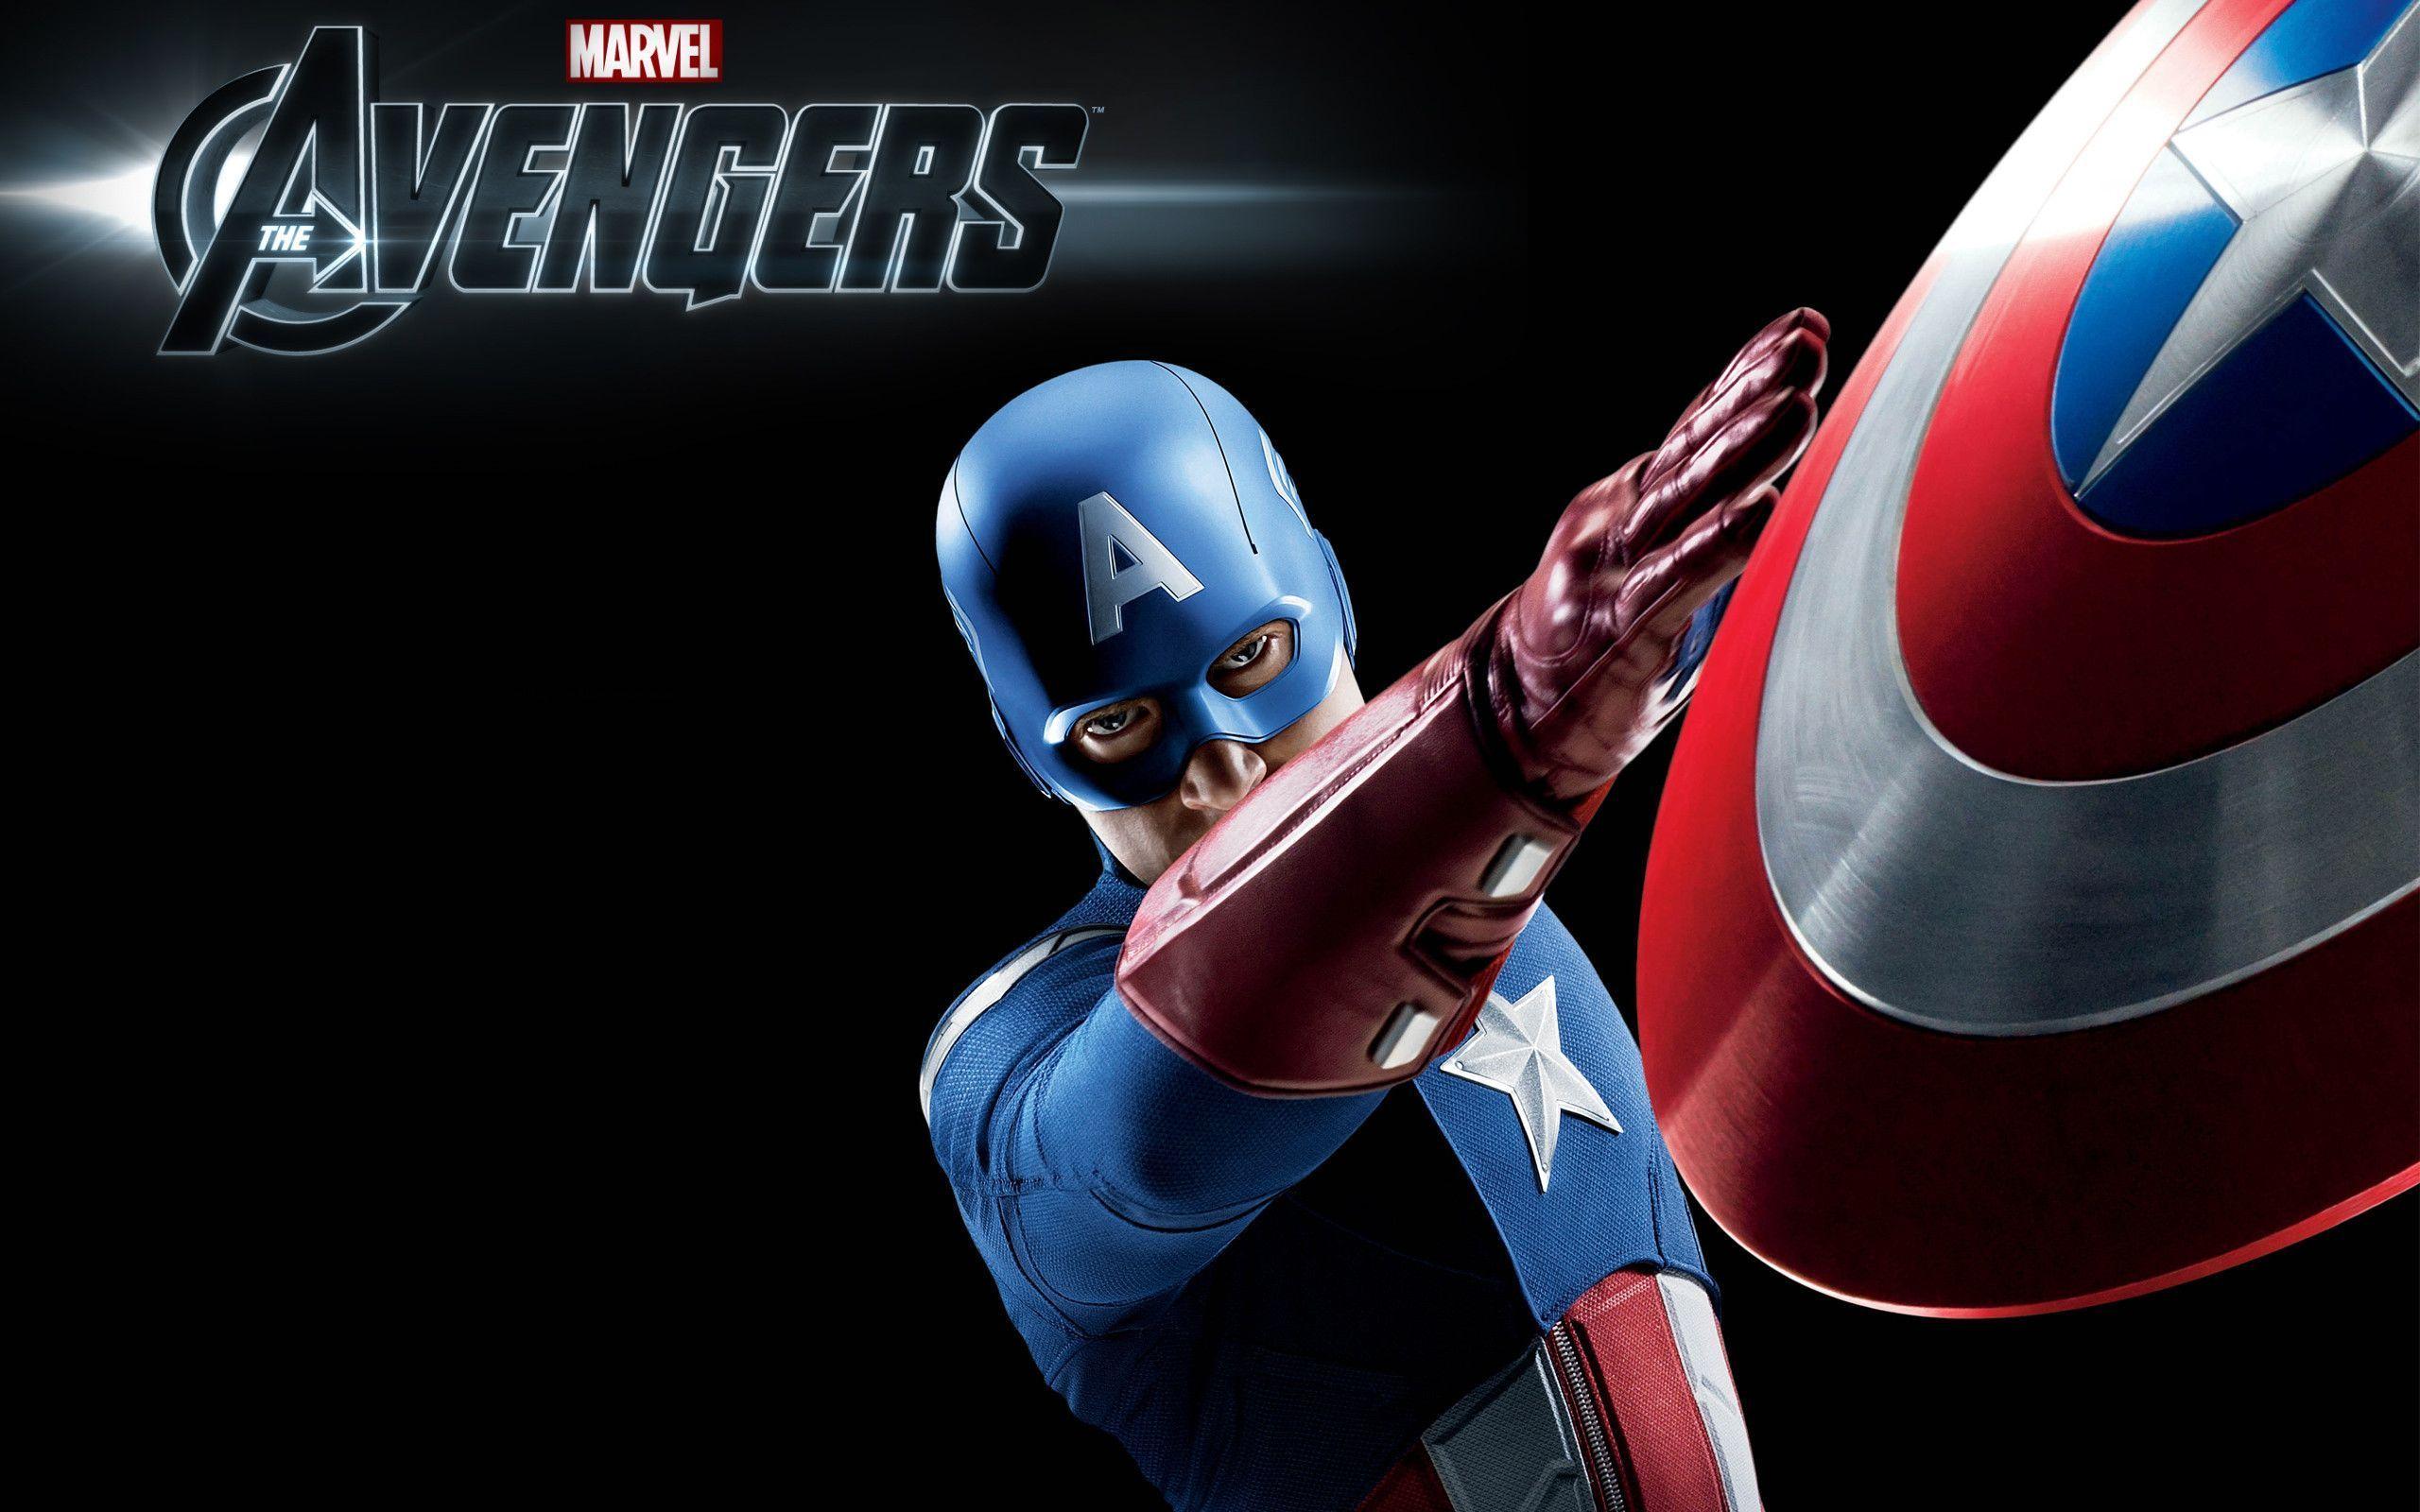 The Avengers HD Wallpaper Free Download Avengers